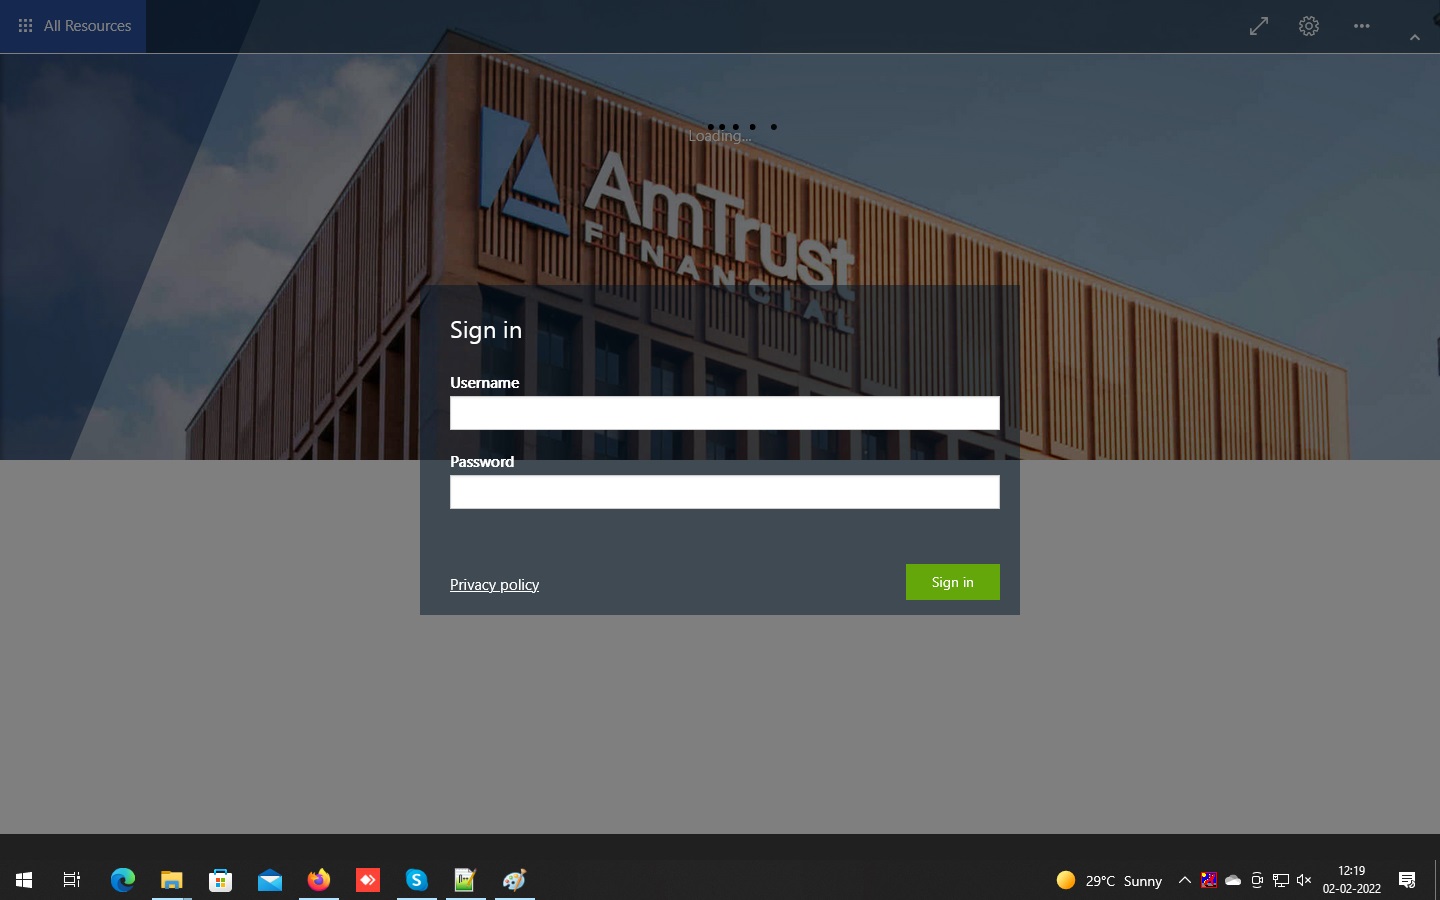 Amtrust – MS RD Web Access 2019 & Web Client